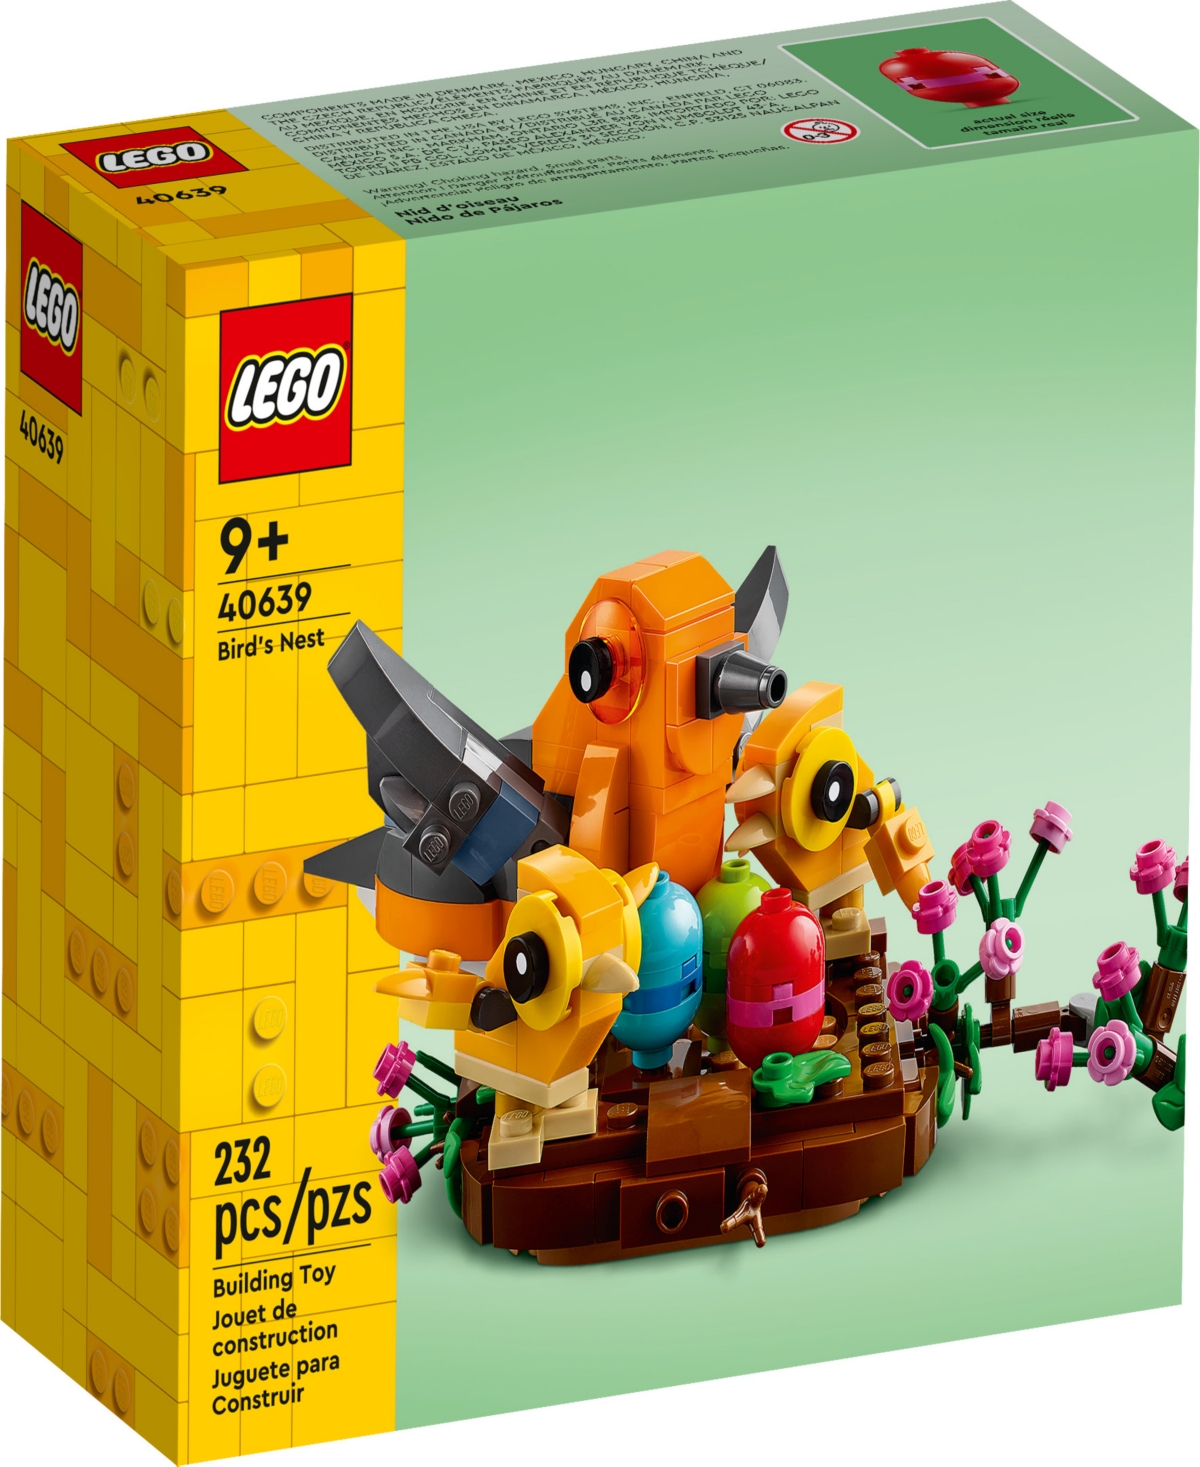 Lego Iconic Bird's Nest 40639 Building Set, 232 Pieces In Multicolor